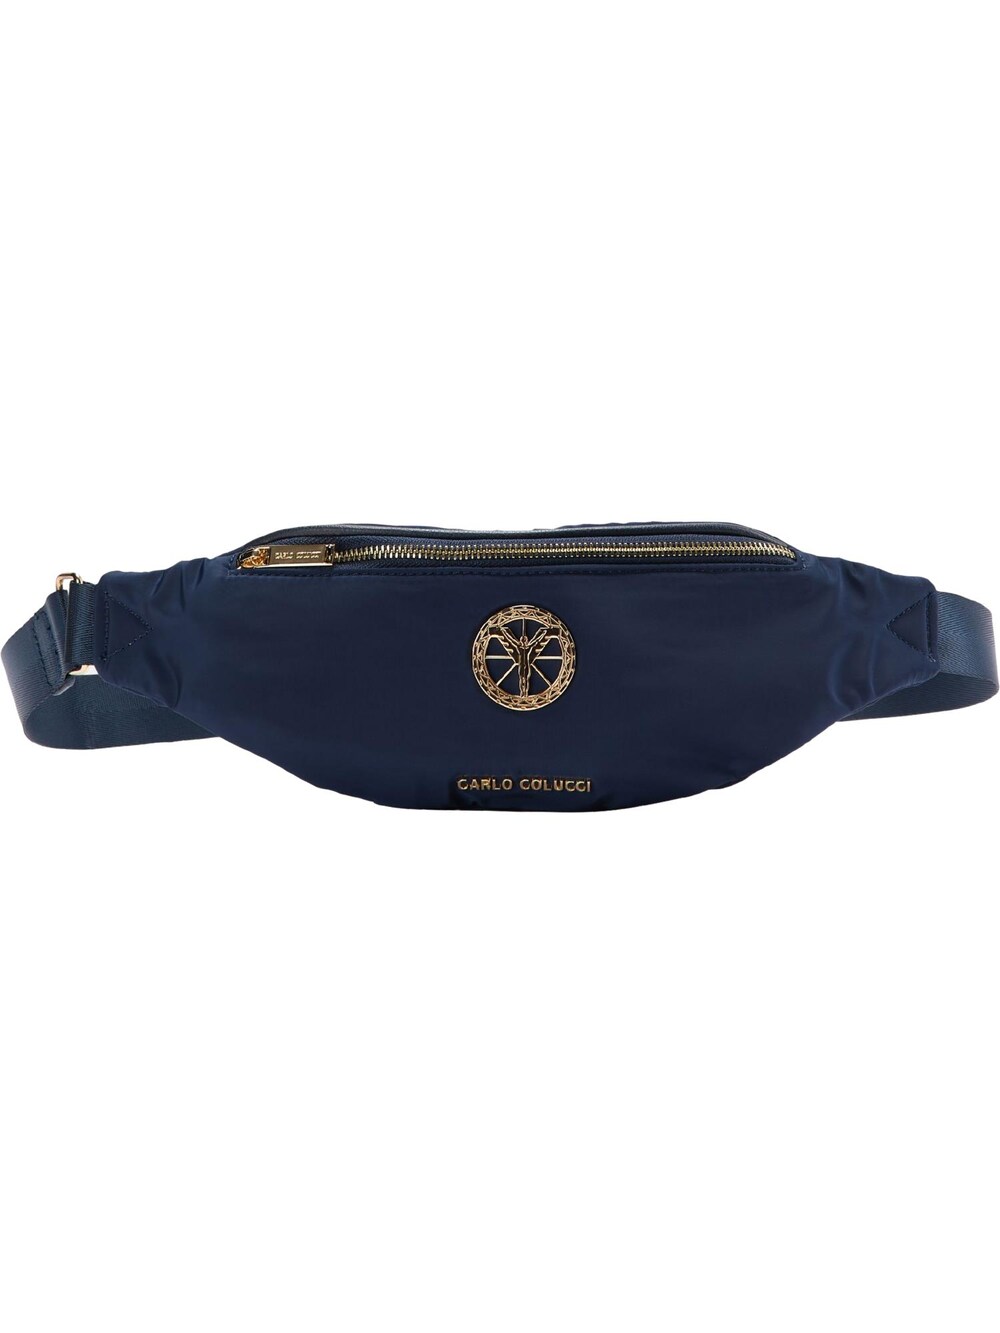 Поясная сумка Carlo Colucci, темно-синий поясная сумка carlo gattini 7013 01